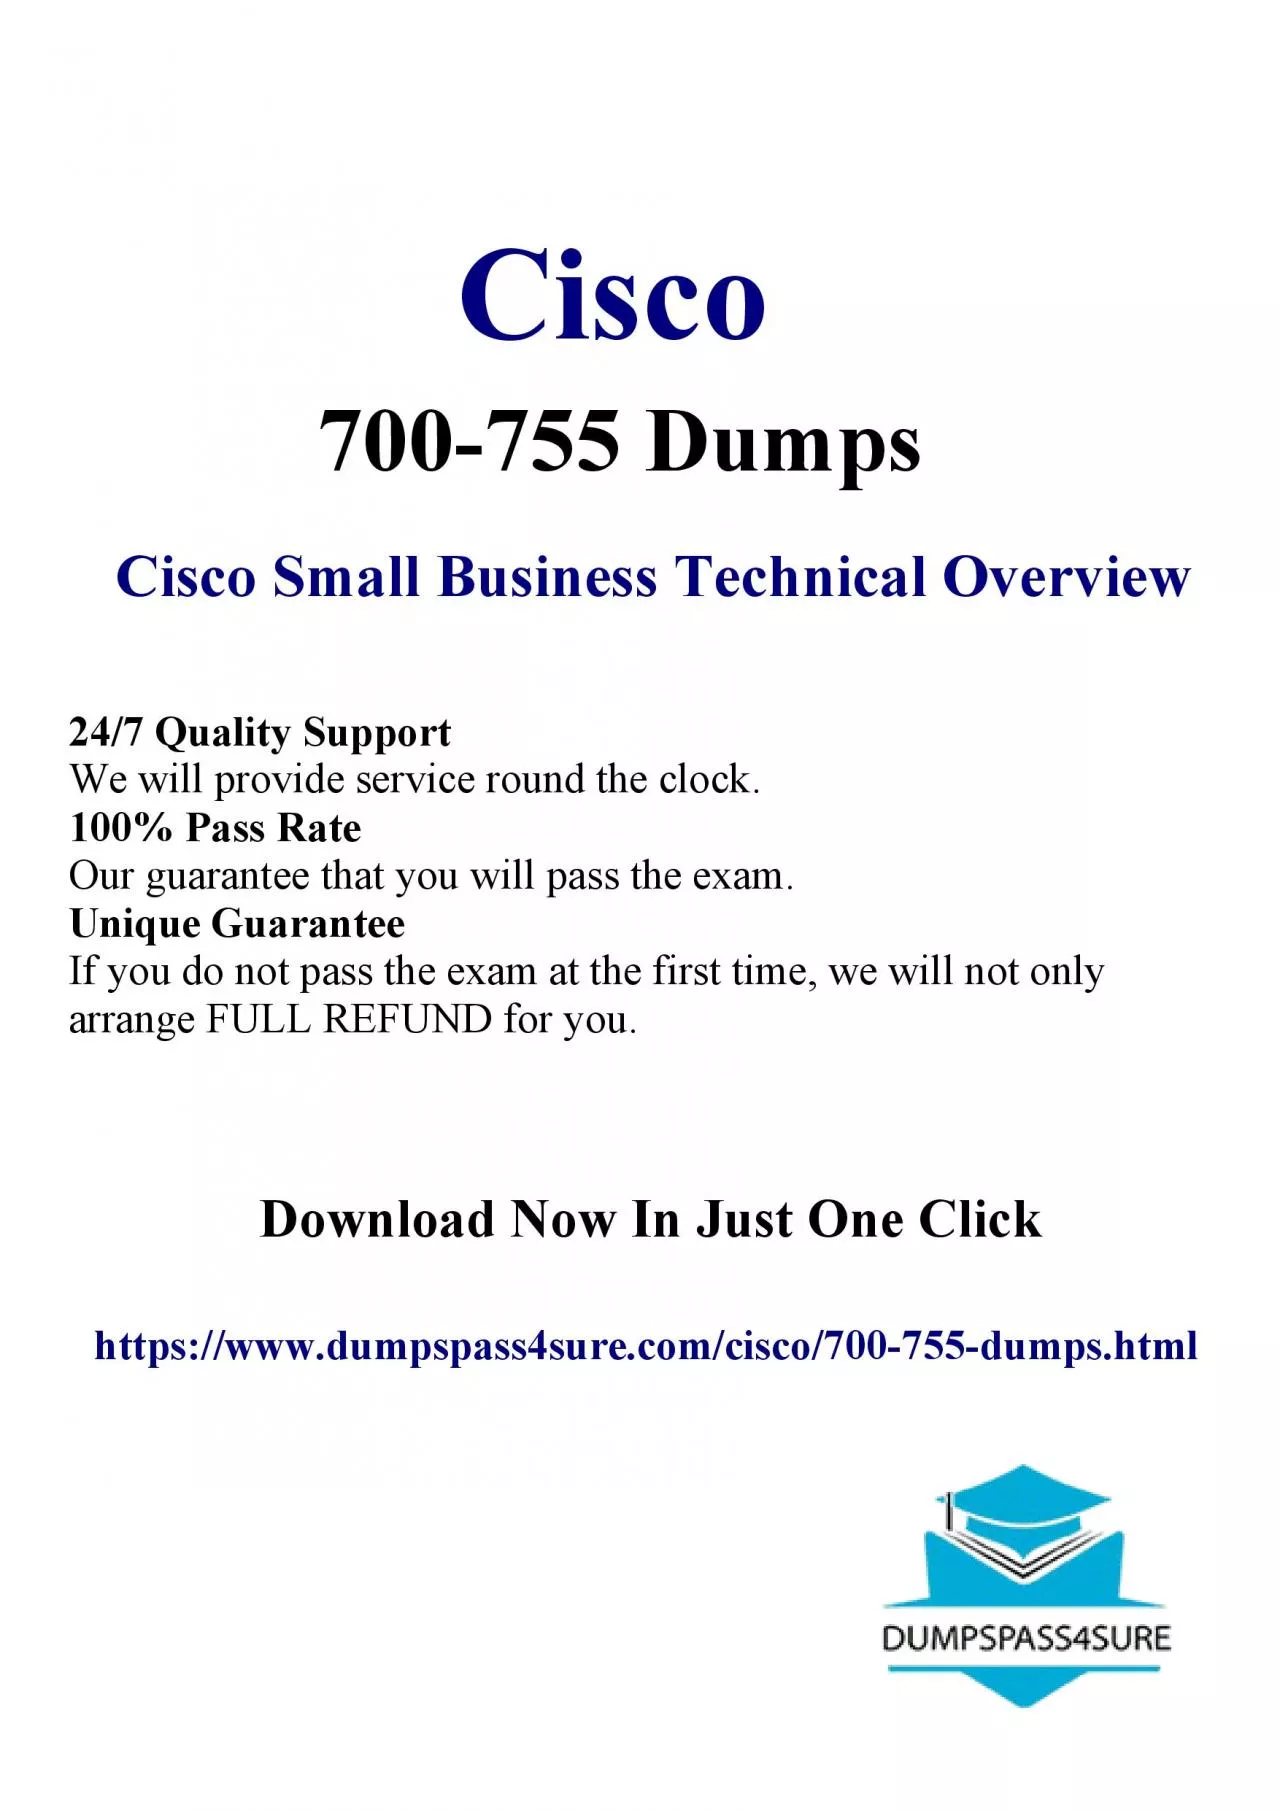 Sleigh the Cisco 700-755 Study Material: DumpsPass4Sure Christmas Offer Knocks 20% Off!